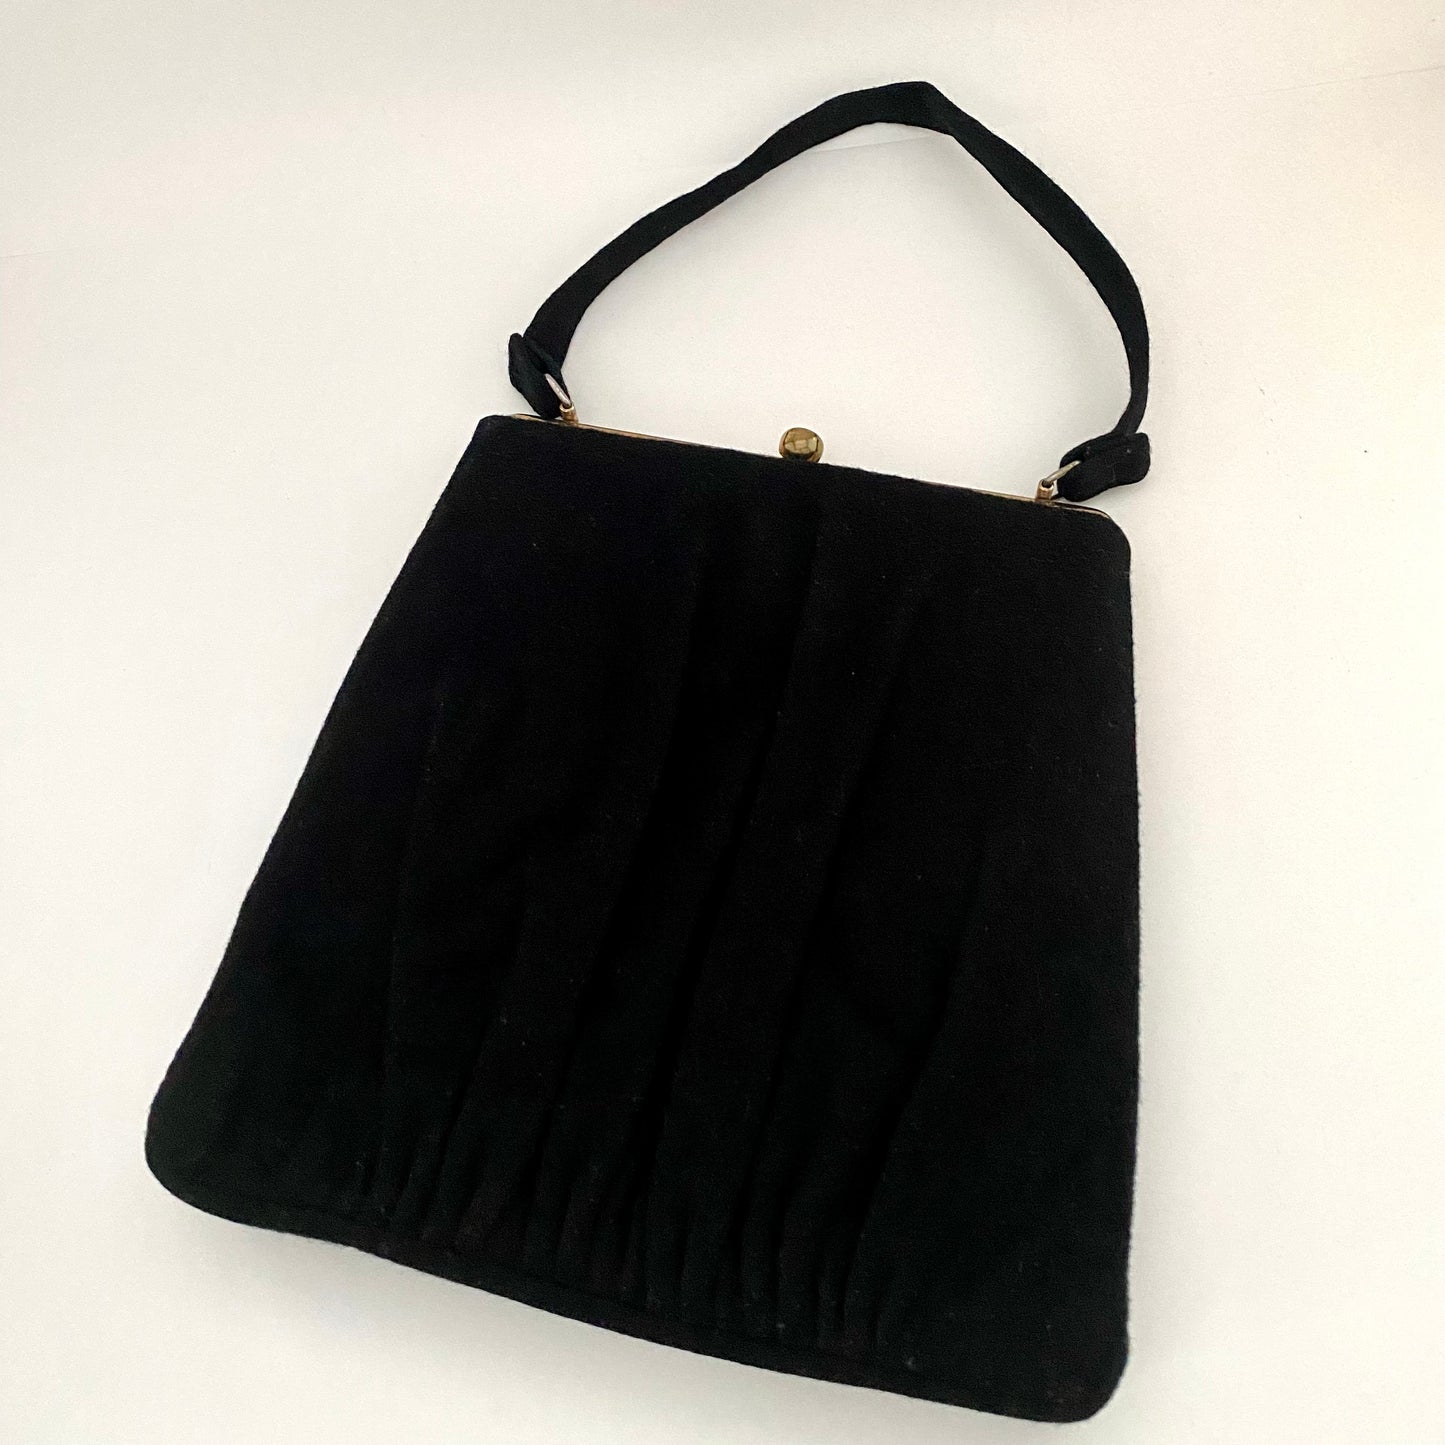 Late 40s/ Early 50s Black Fabric Handbag